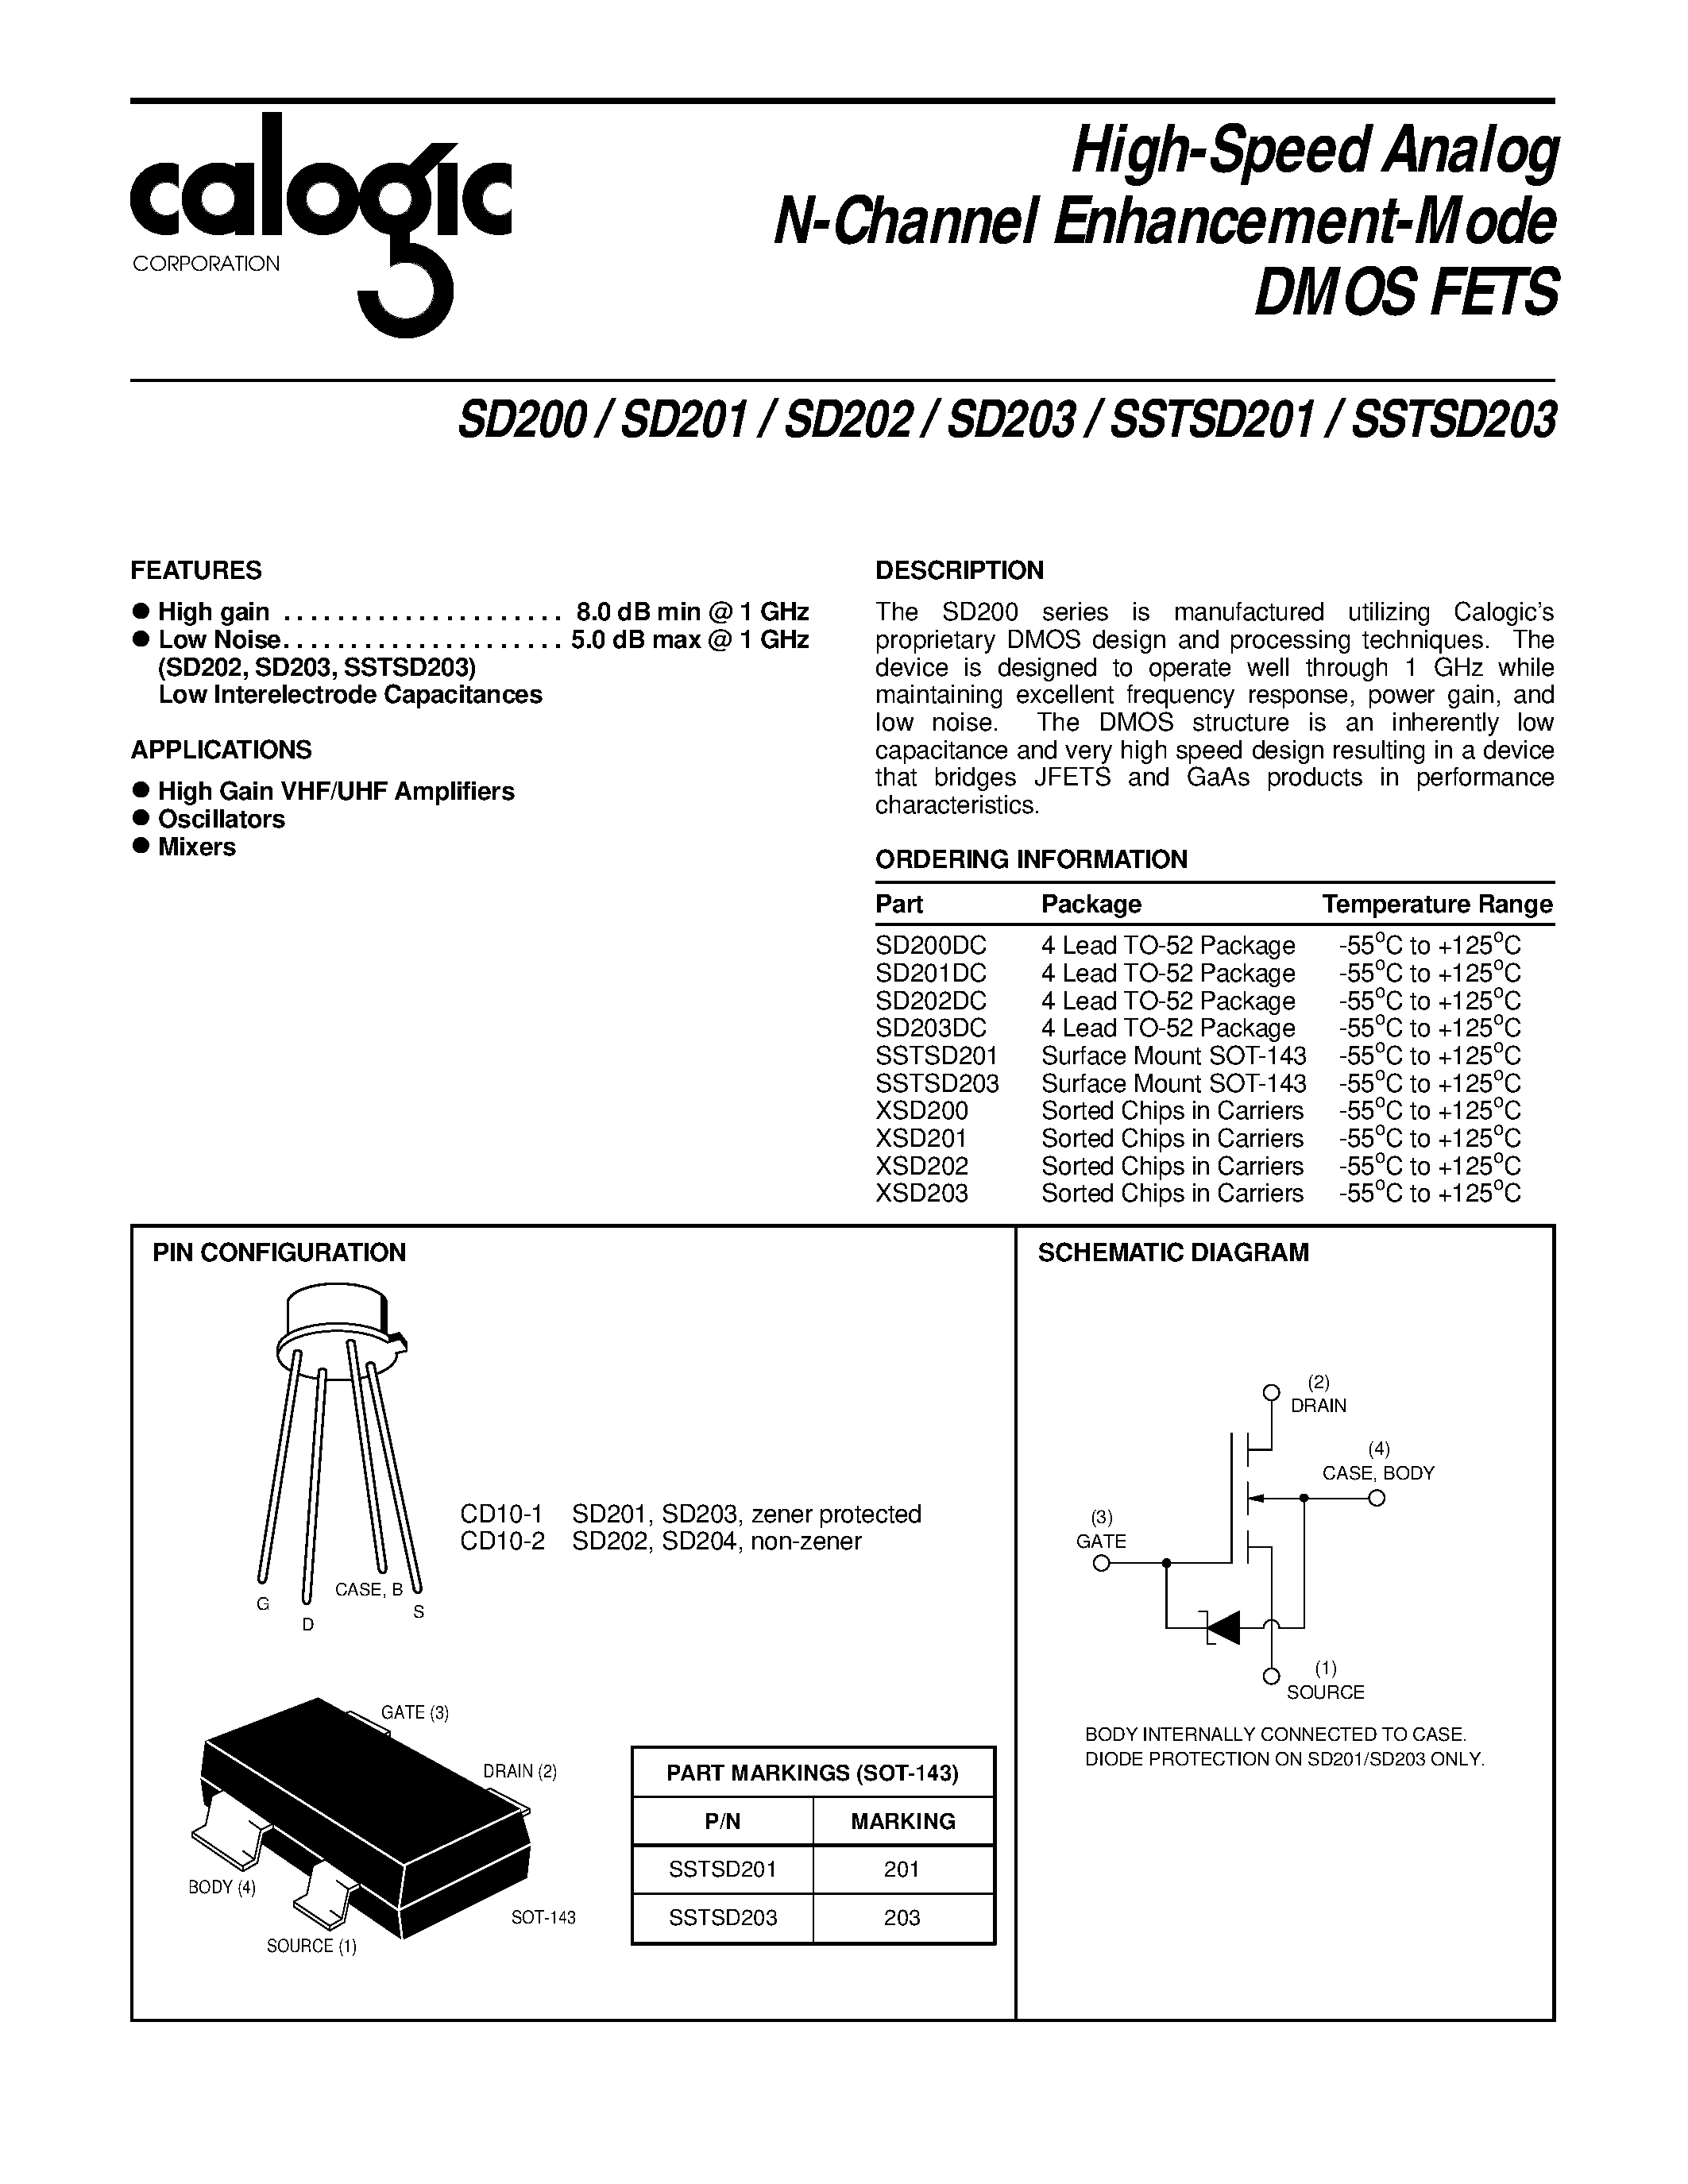 Даташит SD200 - (SD200 - SD203) High-Speed Analog N-Channel Enhancement-Mode DMOS FETS страница 1